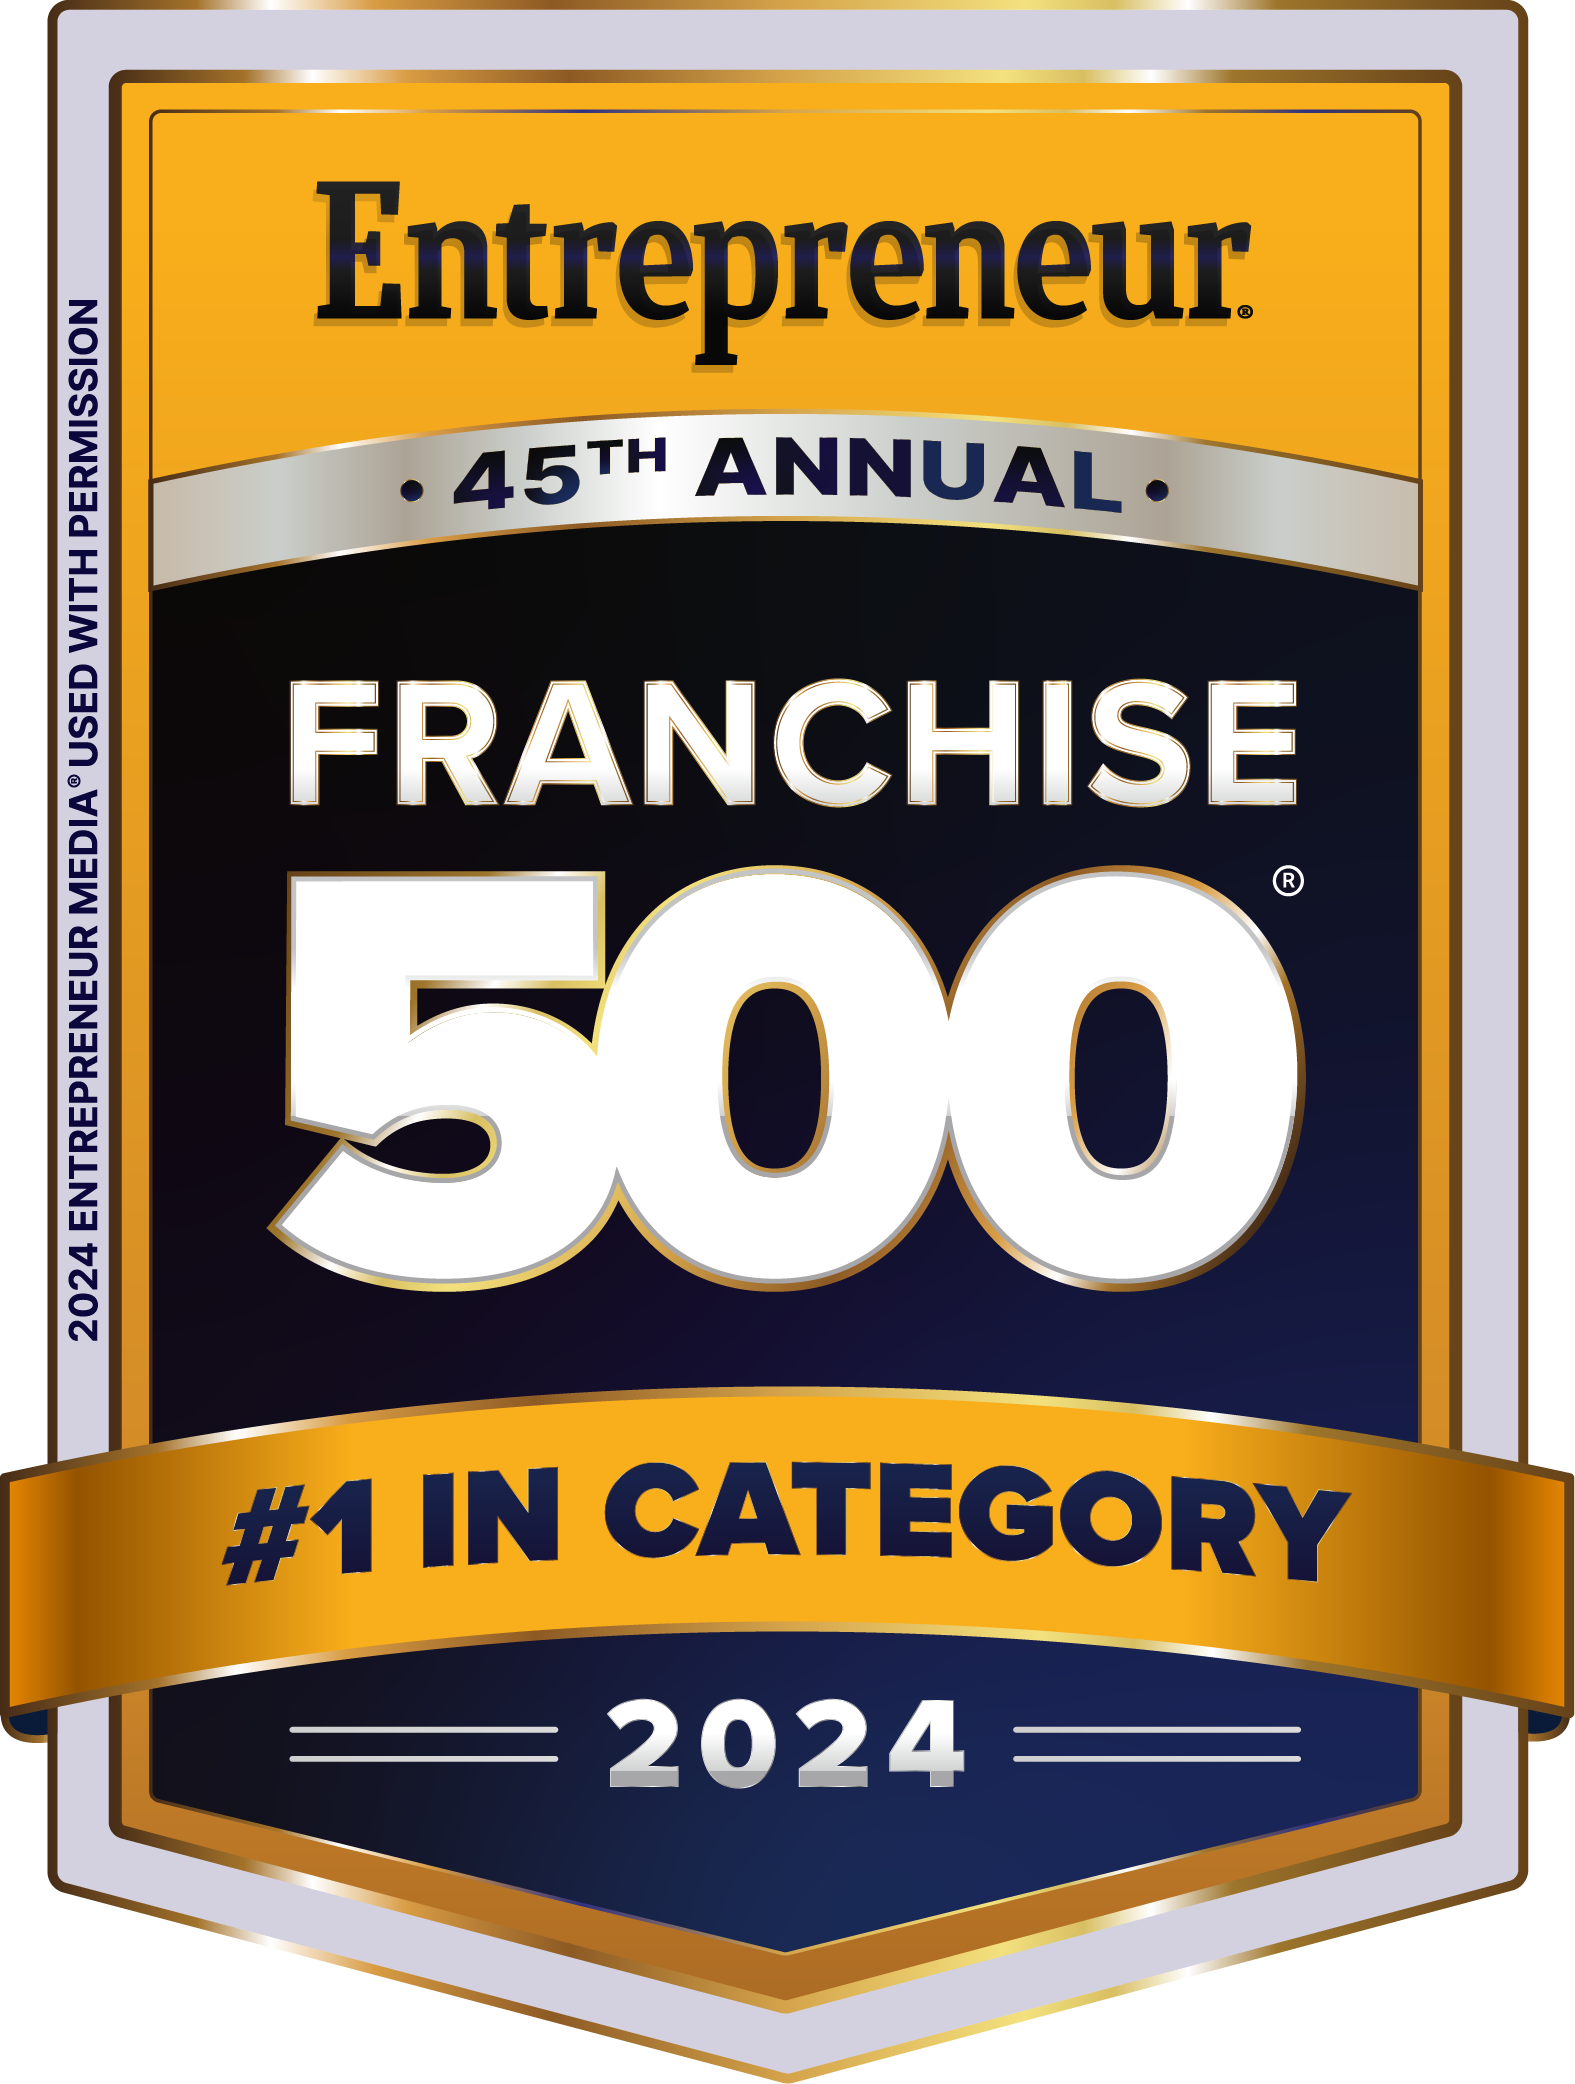 Entrepreneur Franchise 500 2023 Ranked #1 in Category, verified